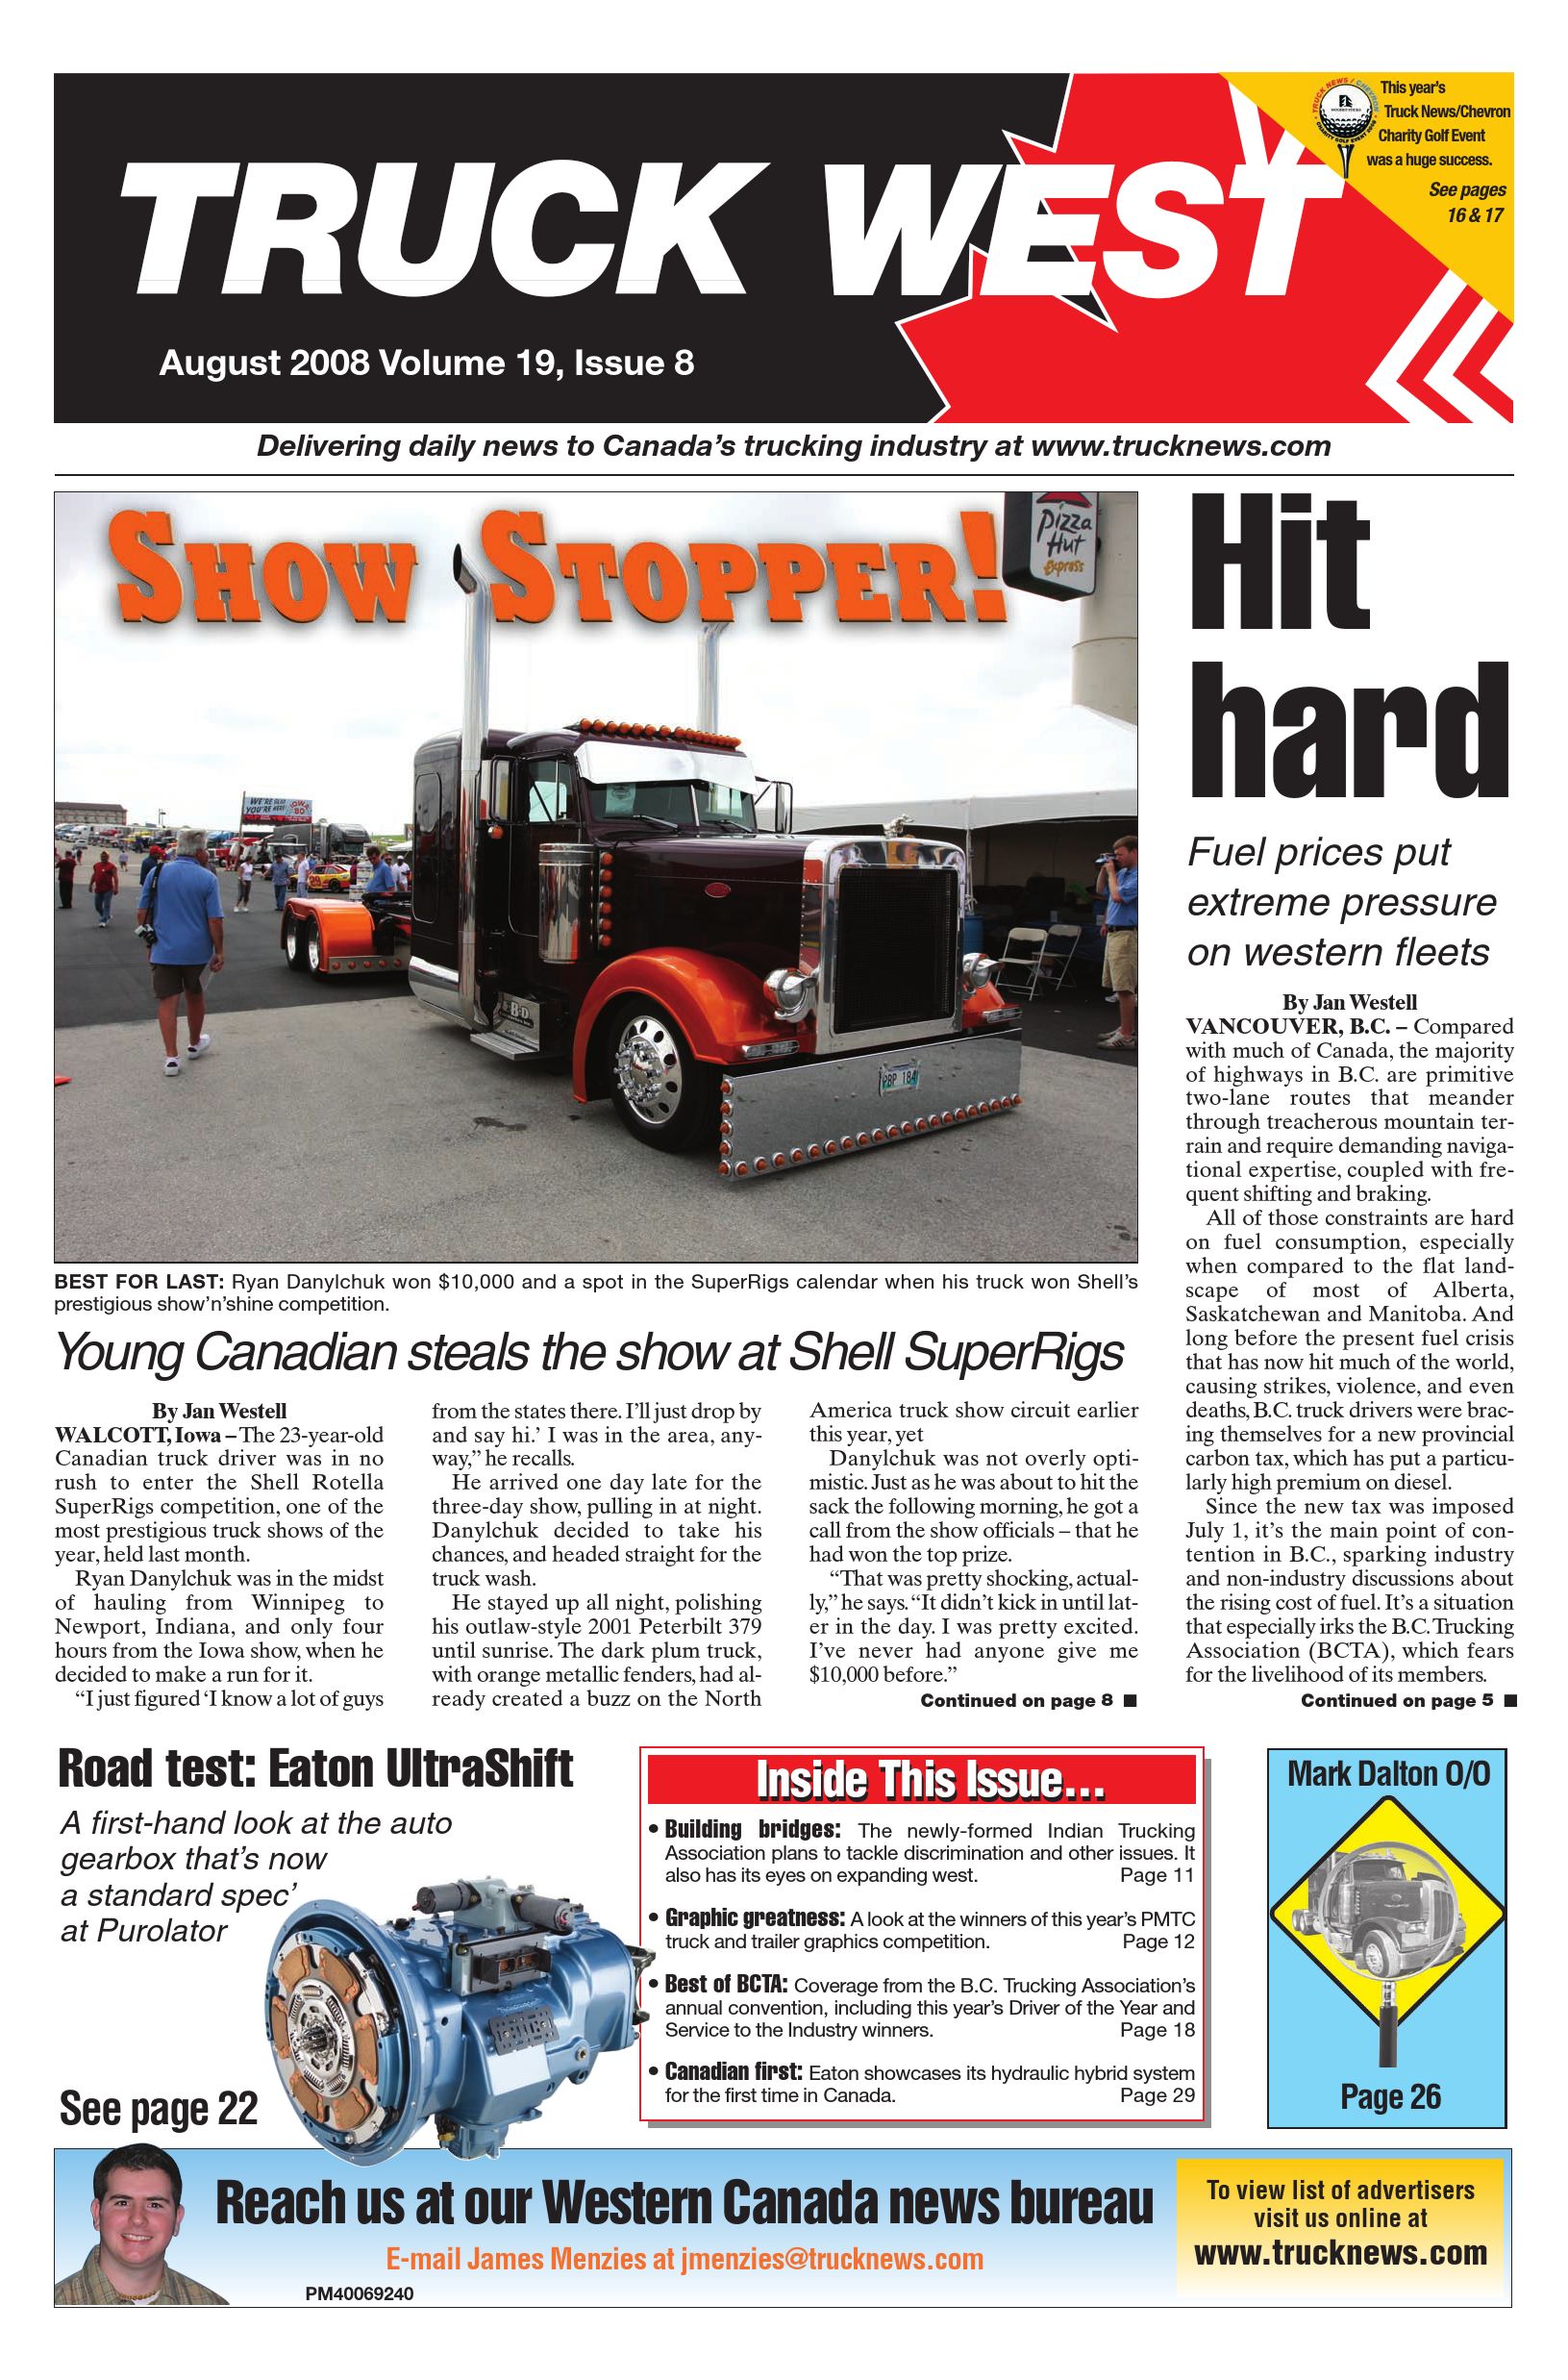 Truck News West – August 2008